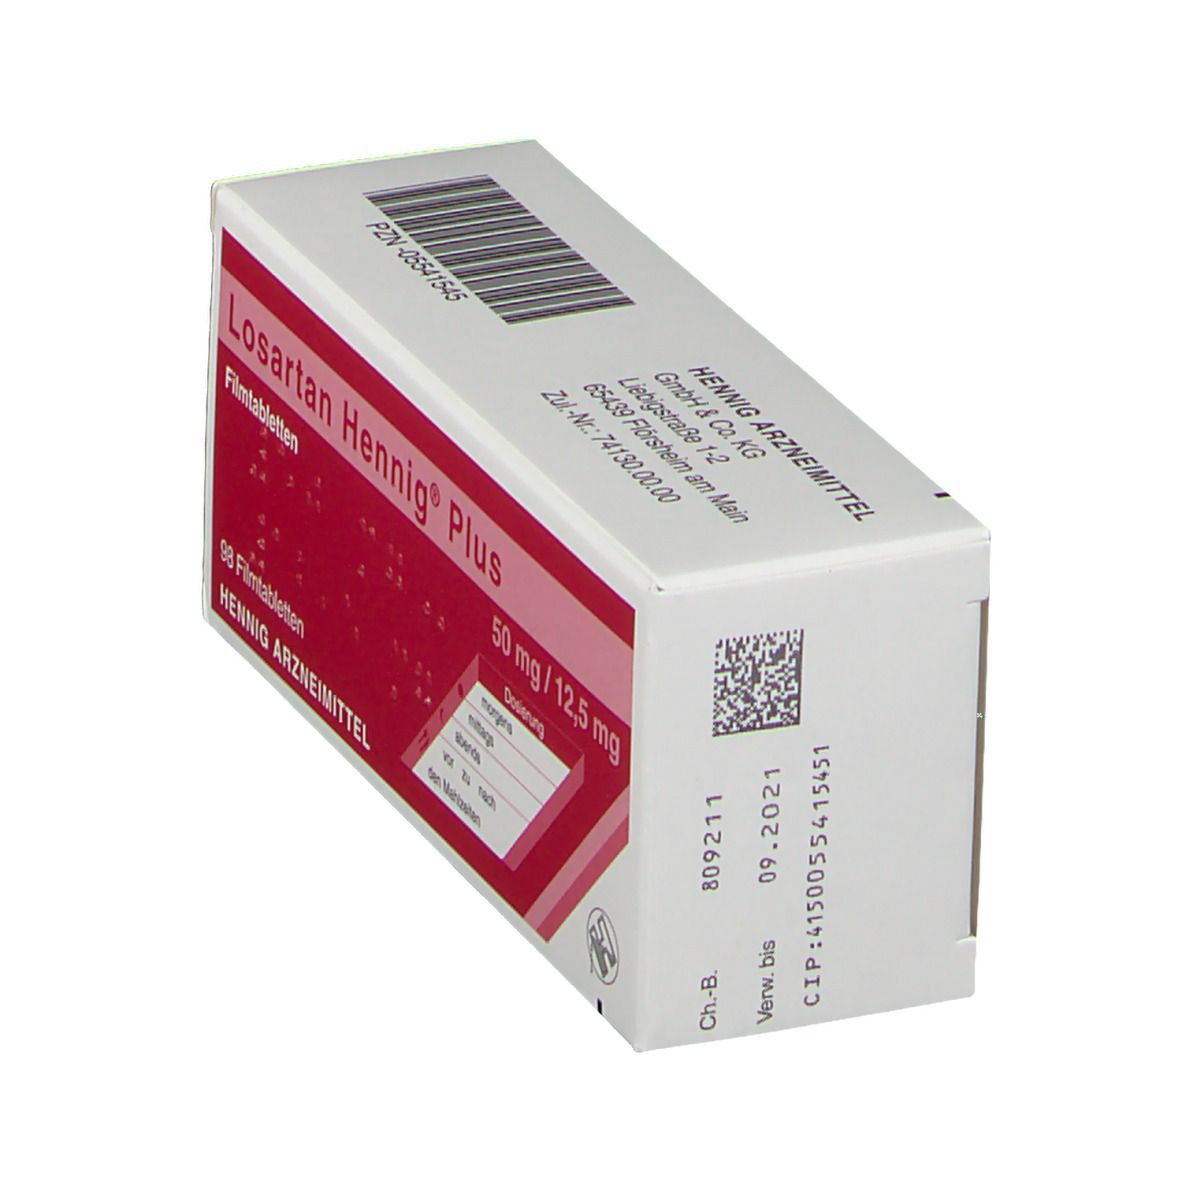 Losartan Hennig® Plus 50 mg/12,5 mg